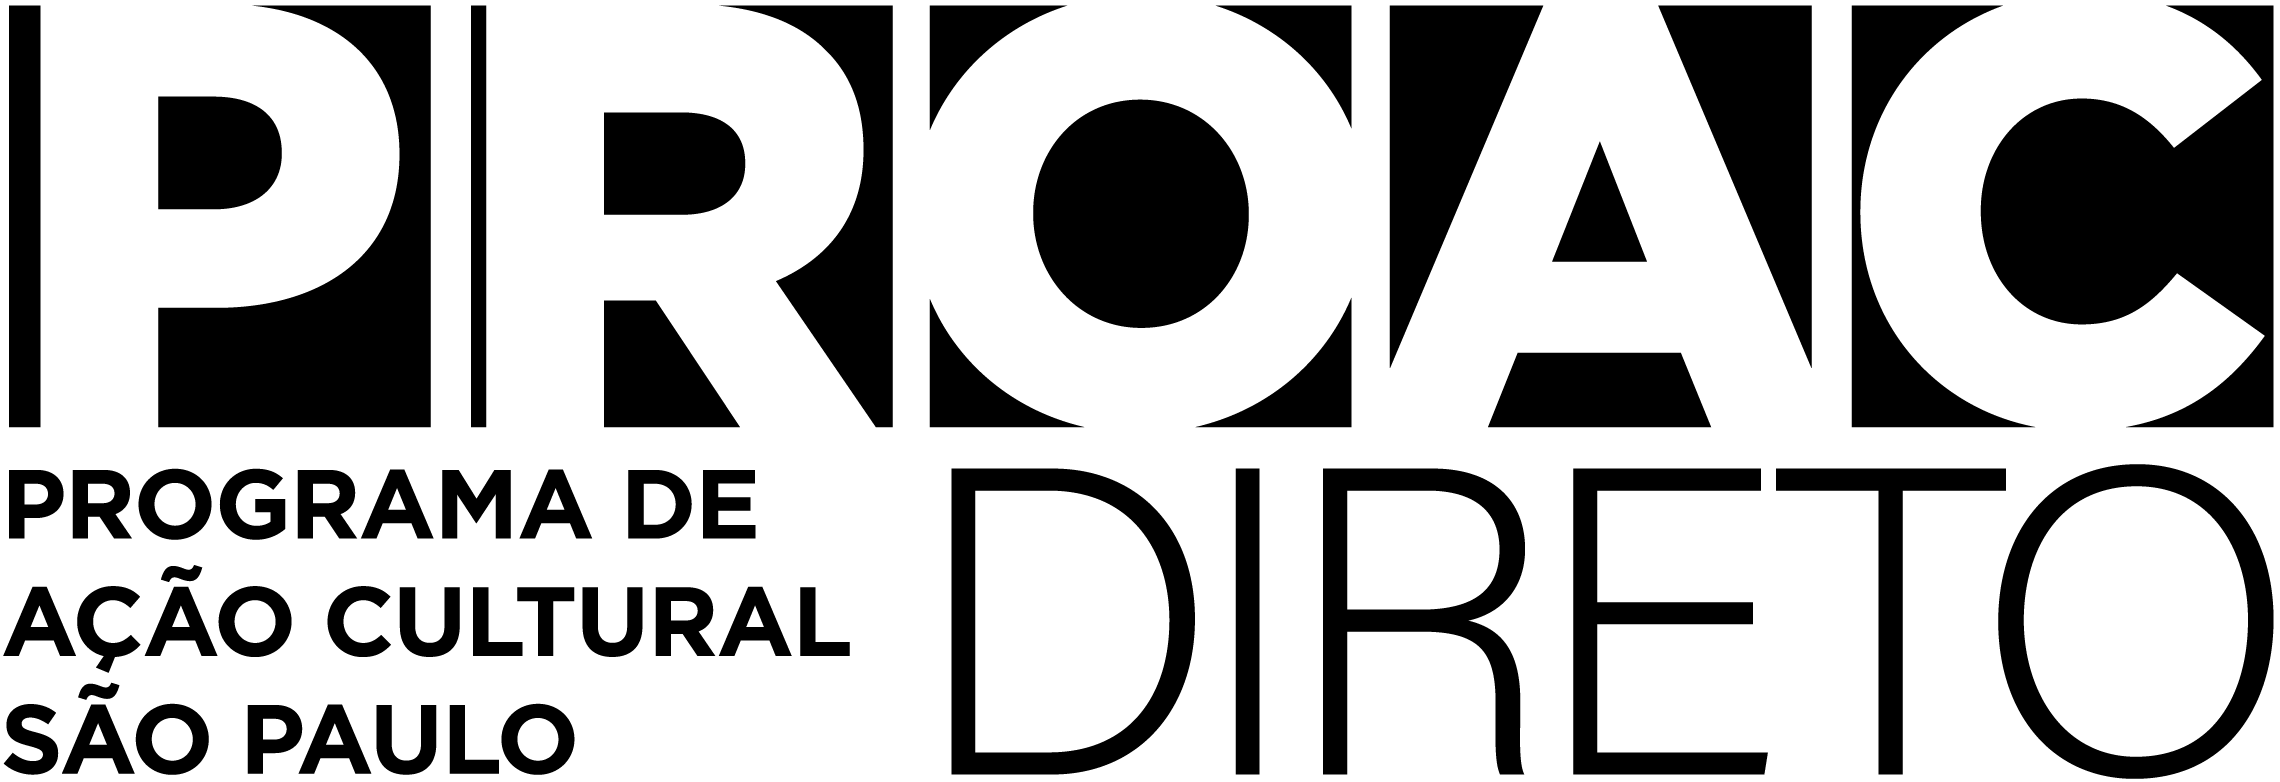 Logo PROAC DIRETO_traco positivo